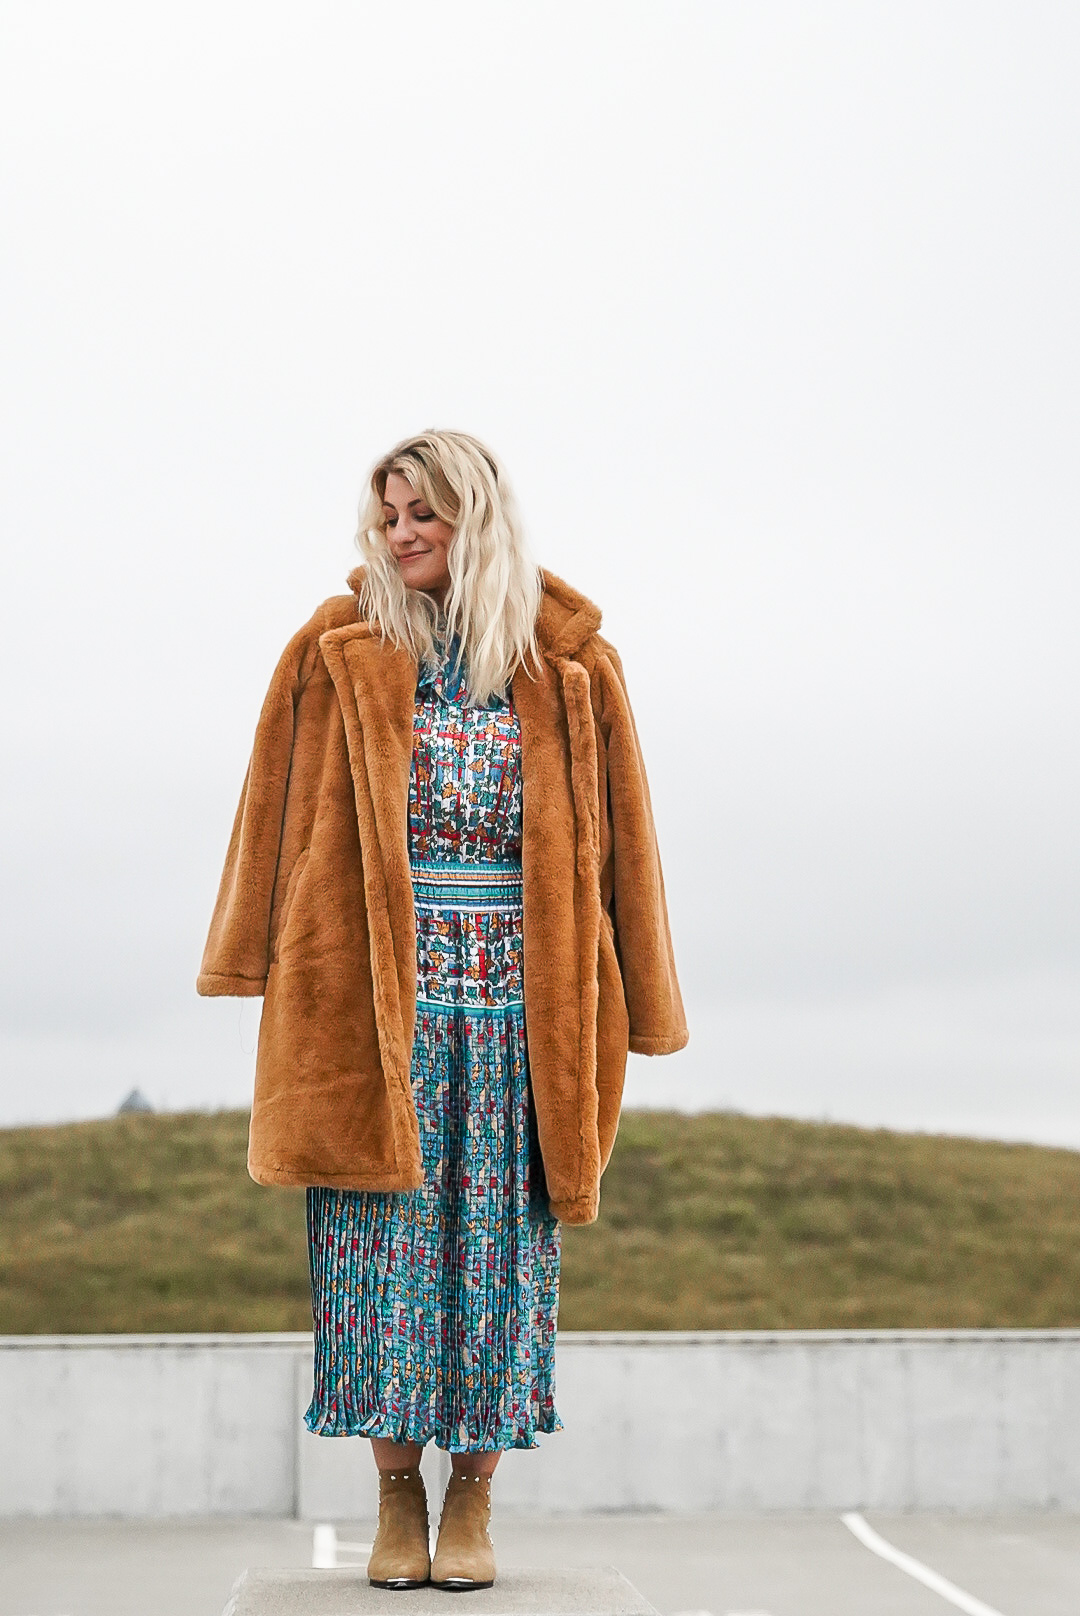 Vintage Silk Dress + Faux Fur Coat. | Ashley from LSR